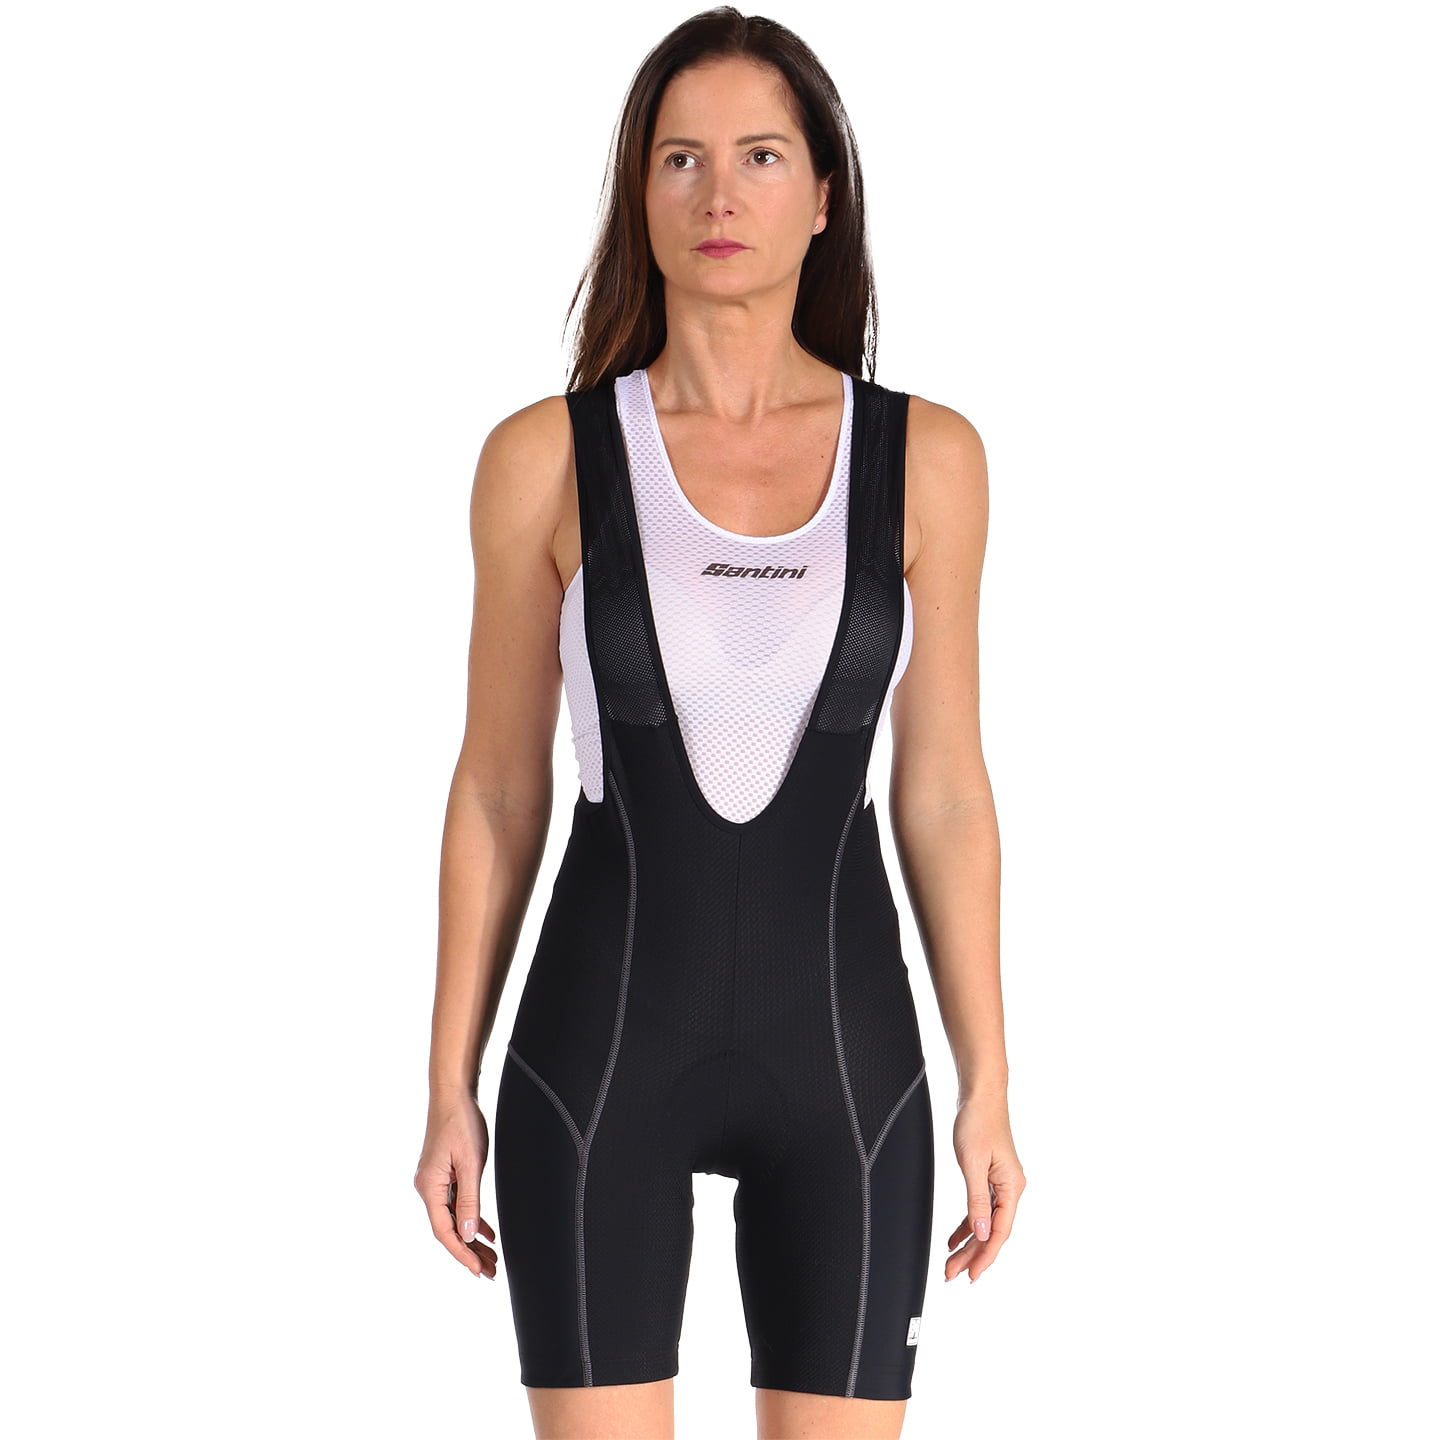 SANTINI Air Pro Gel 2 Women’s Bib Shorts Women’s Bib Shorts, size L, Cycle shorts, Cycling clothing